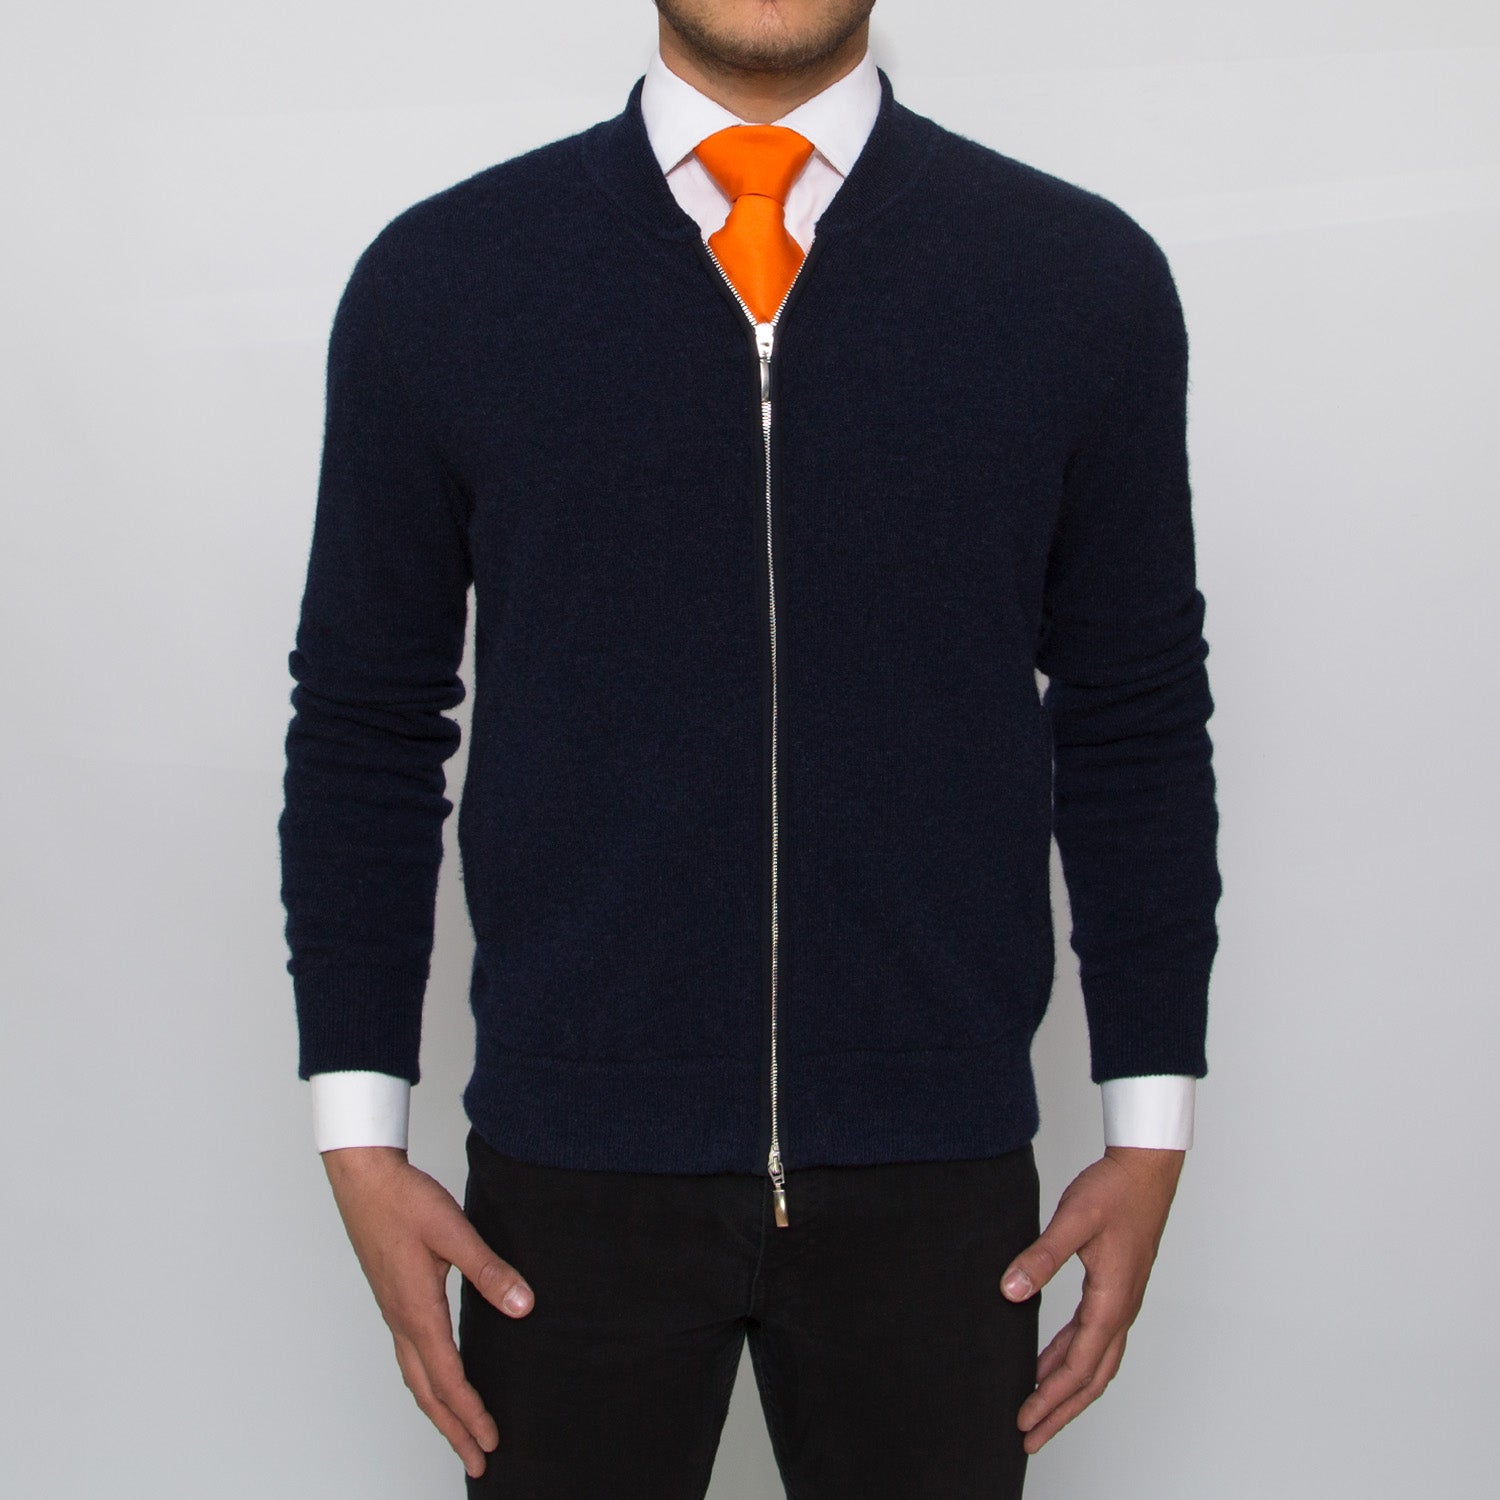 DARIO’S Couture Seven-Fold Tie Frankfurt in 100% Twillsilk in Orange